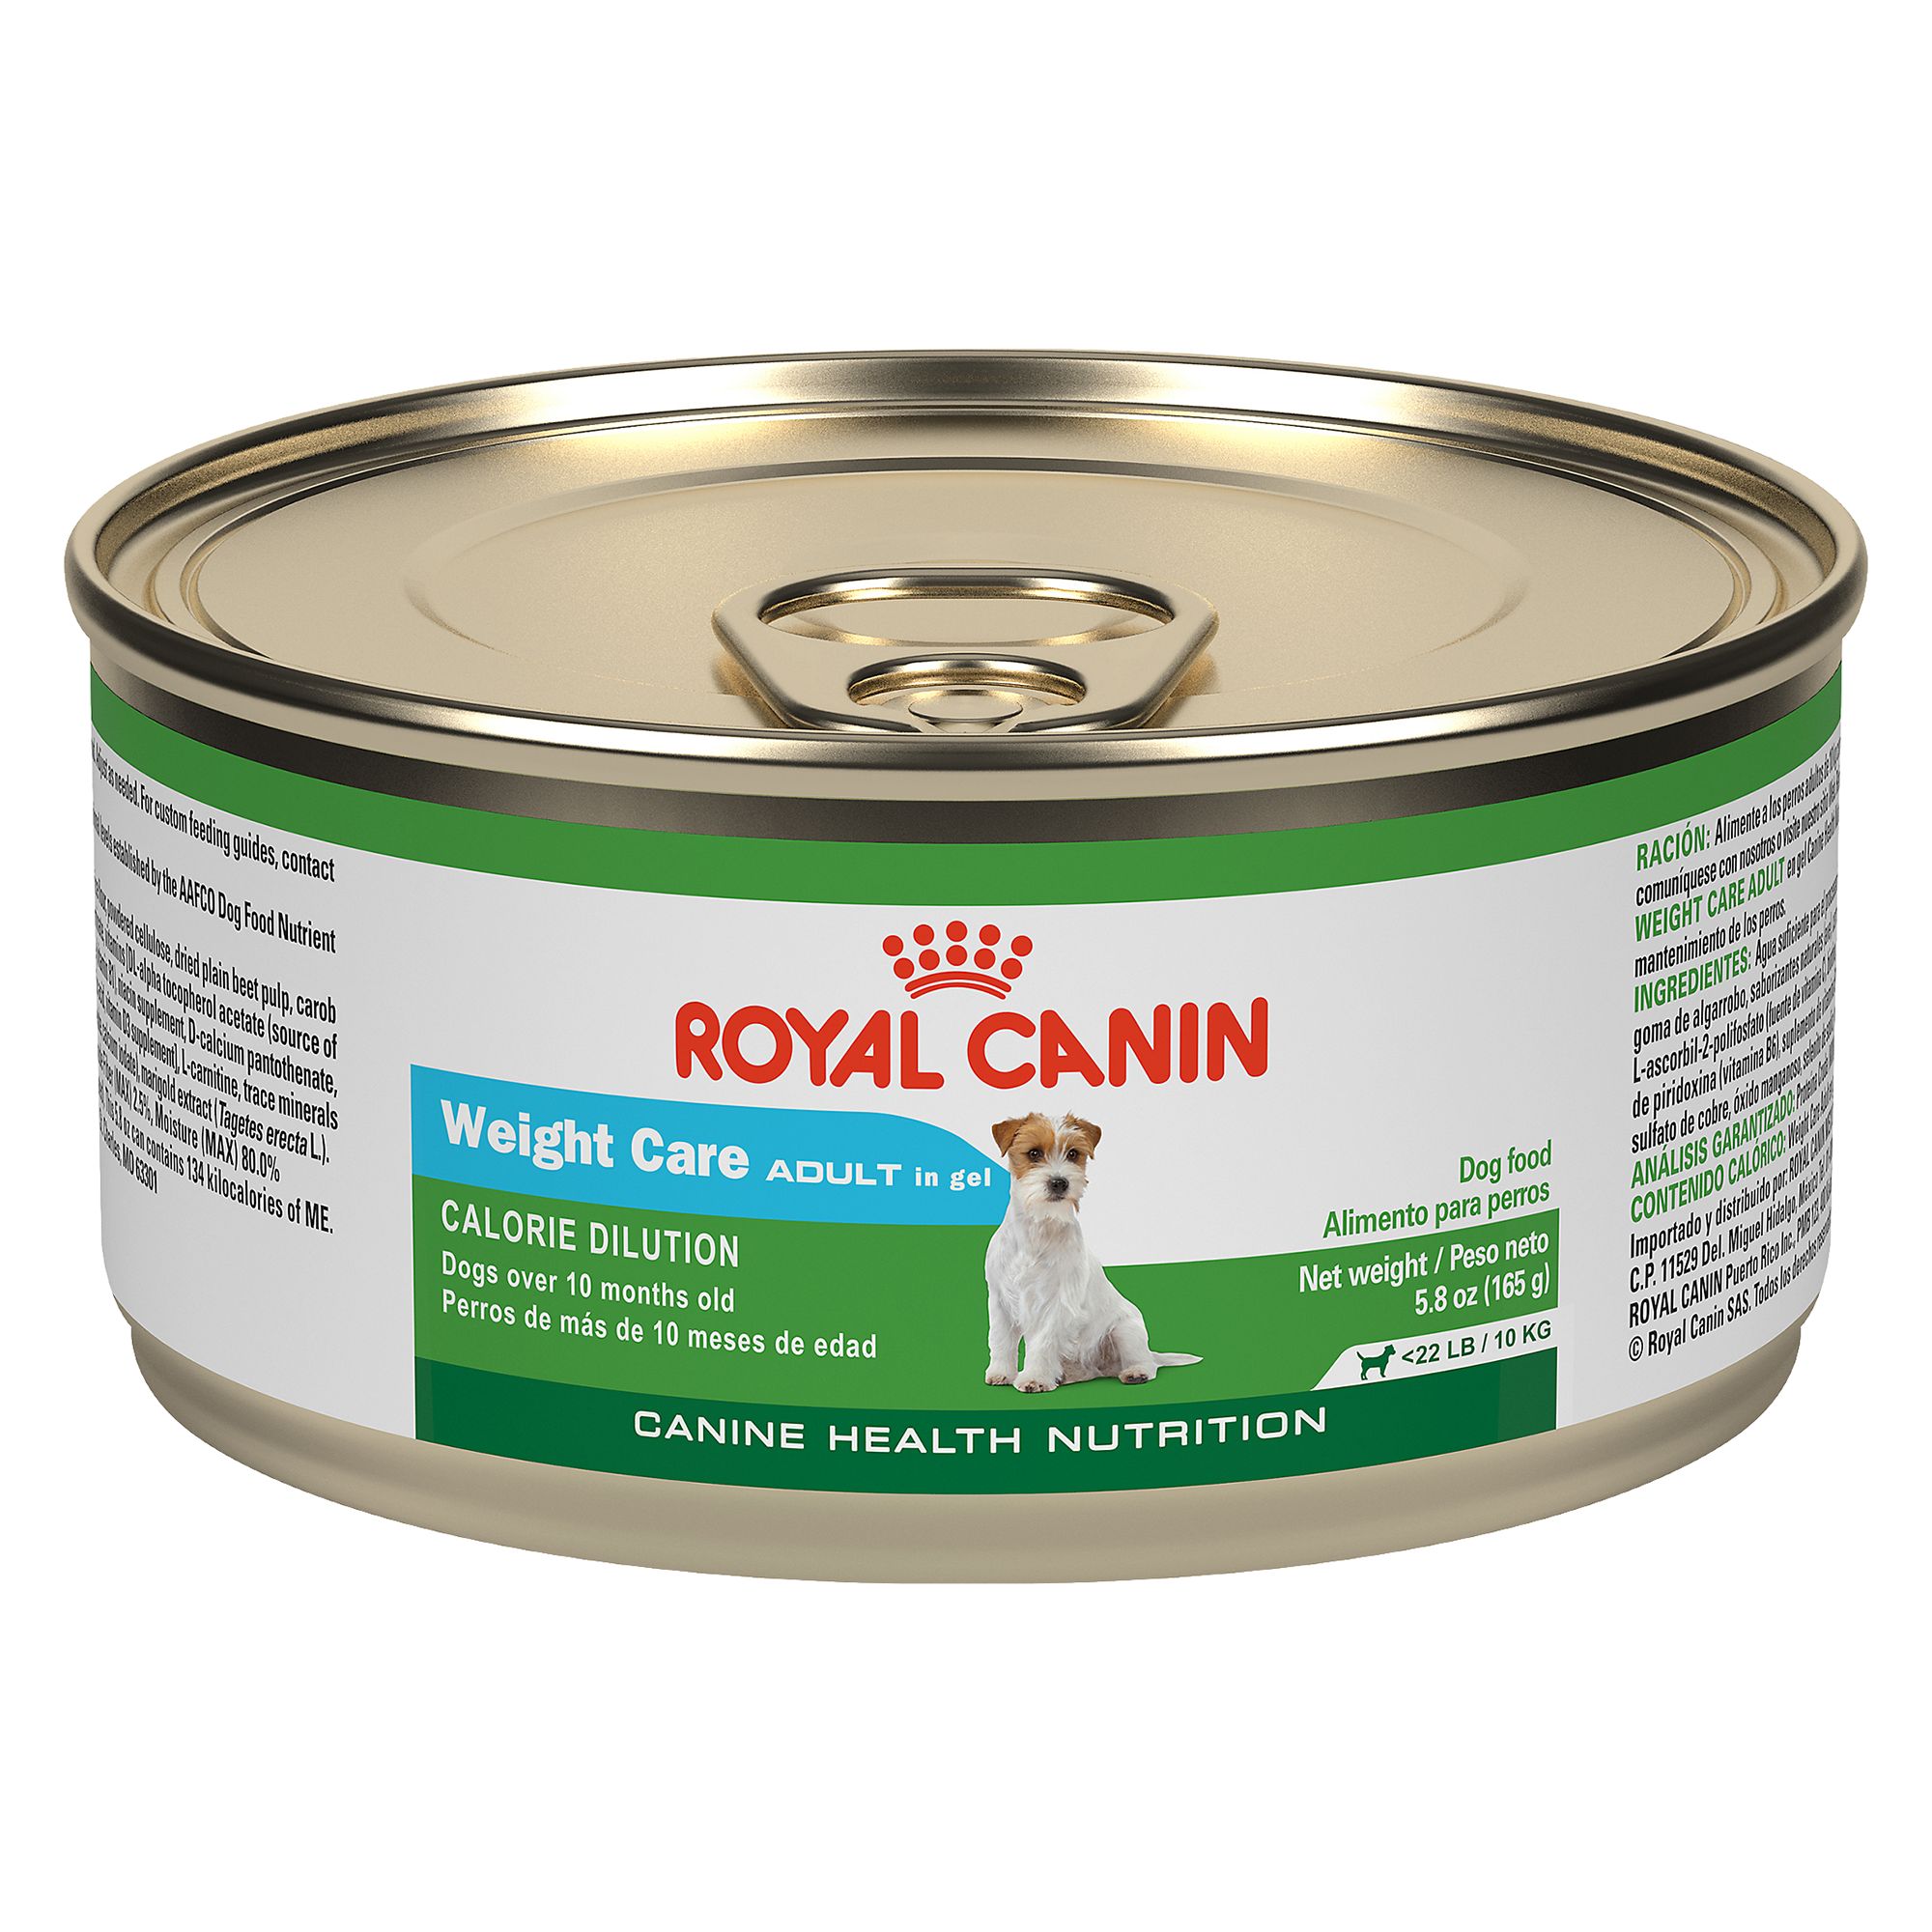 royal canin canned dog food petsmart